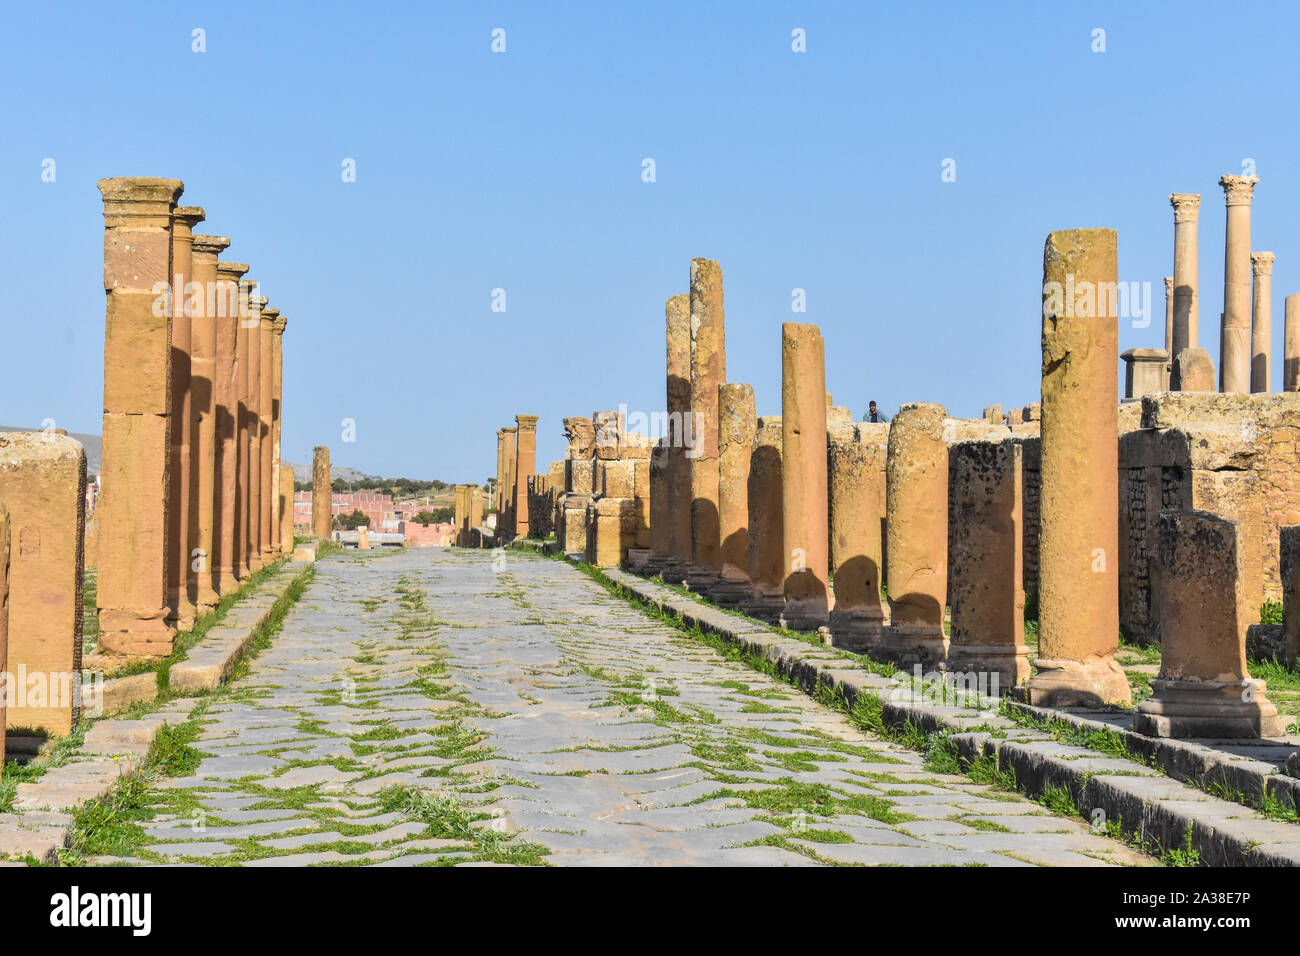 The Ancient Roman City of Timgad in Batna, Algeria, Built around 100 AC Stock Photo